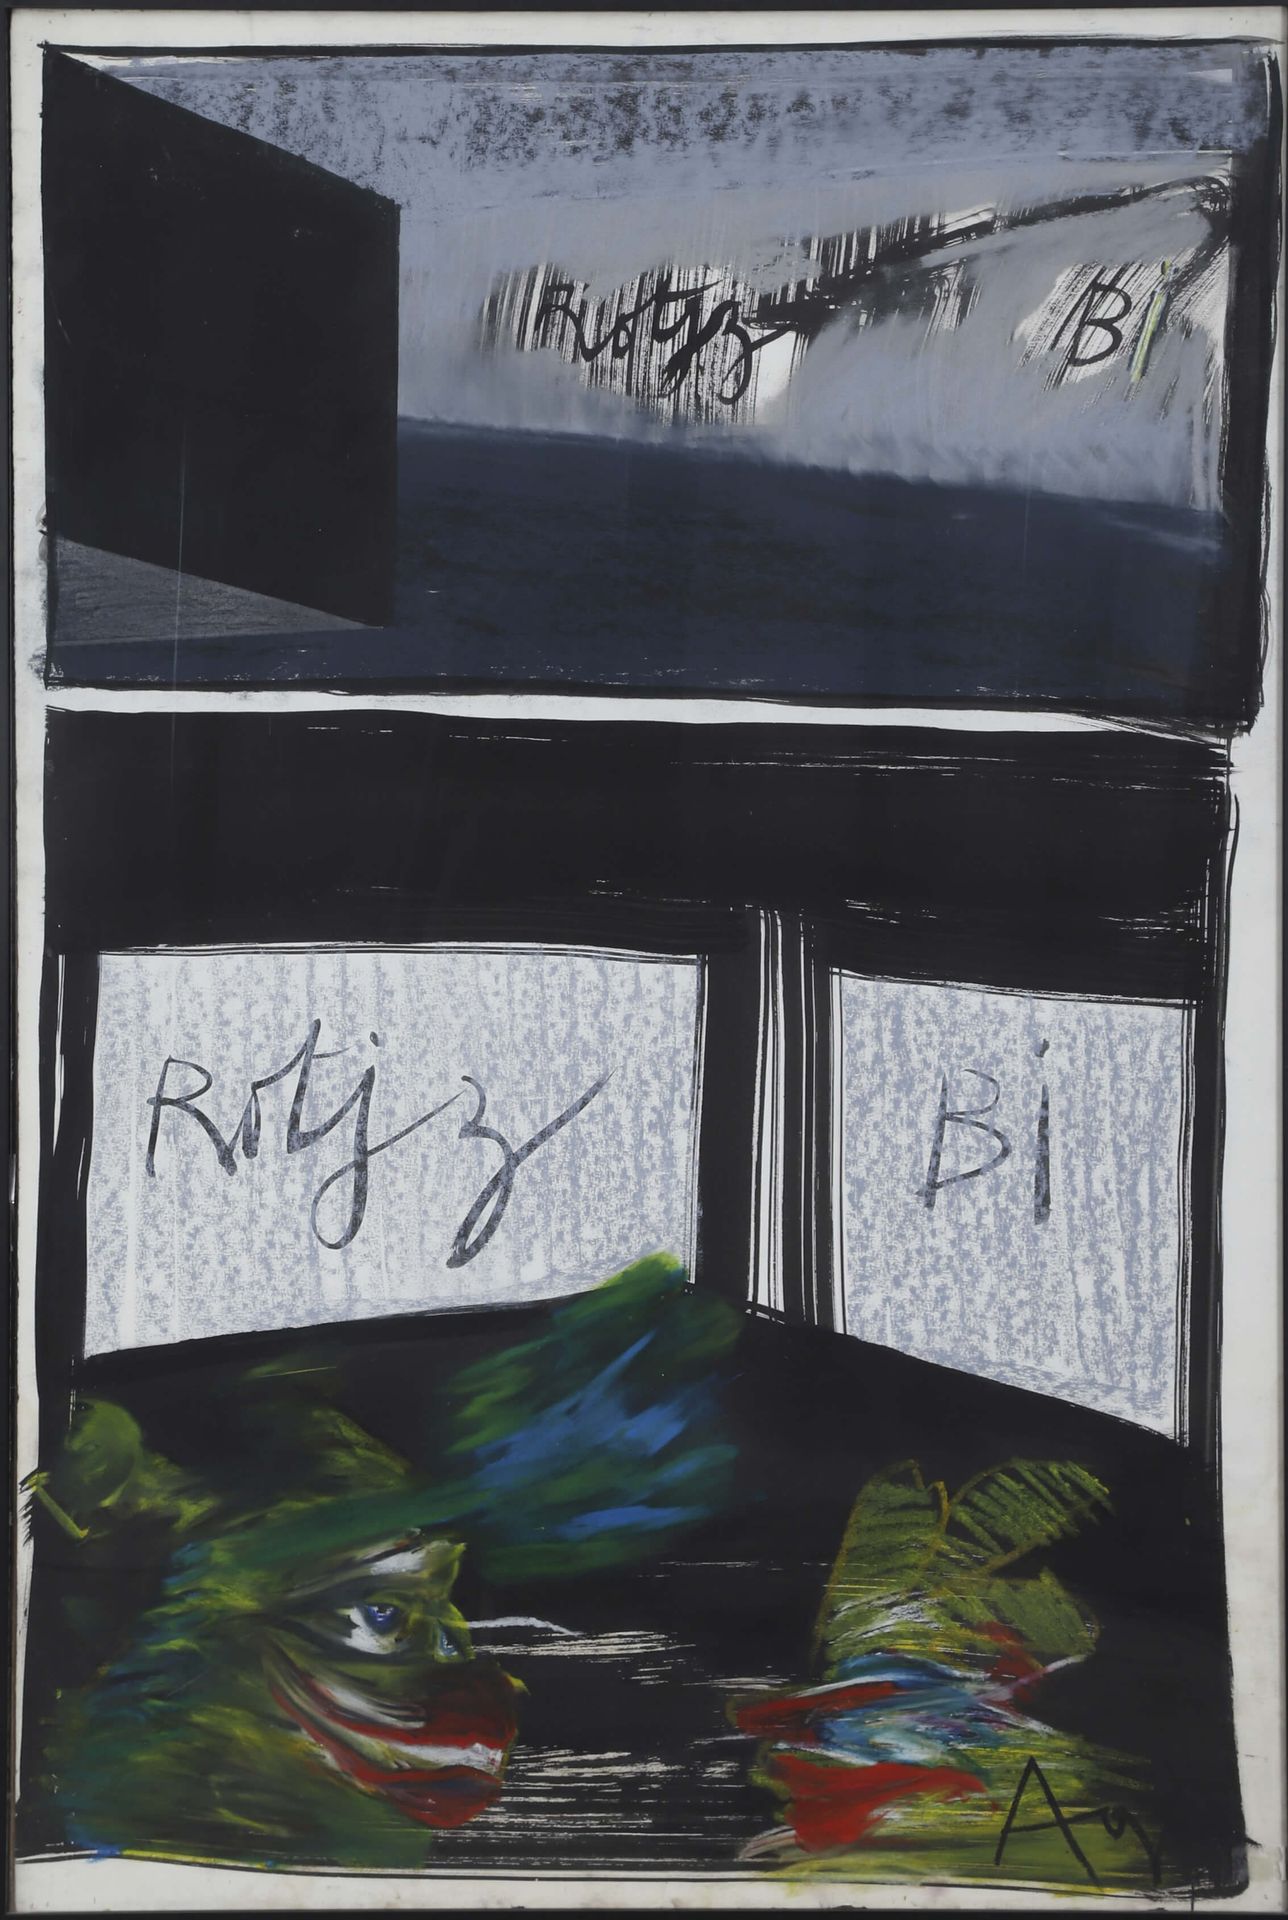 Olivier Agid (né en 1951) Rotjz bi 1985 纸上水墨粉彩，右下角有签名 120 x 80 cm 条件报告: 有框